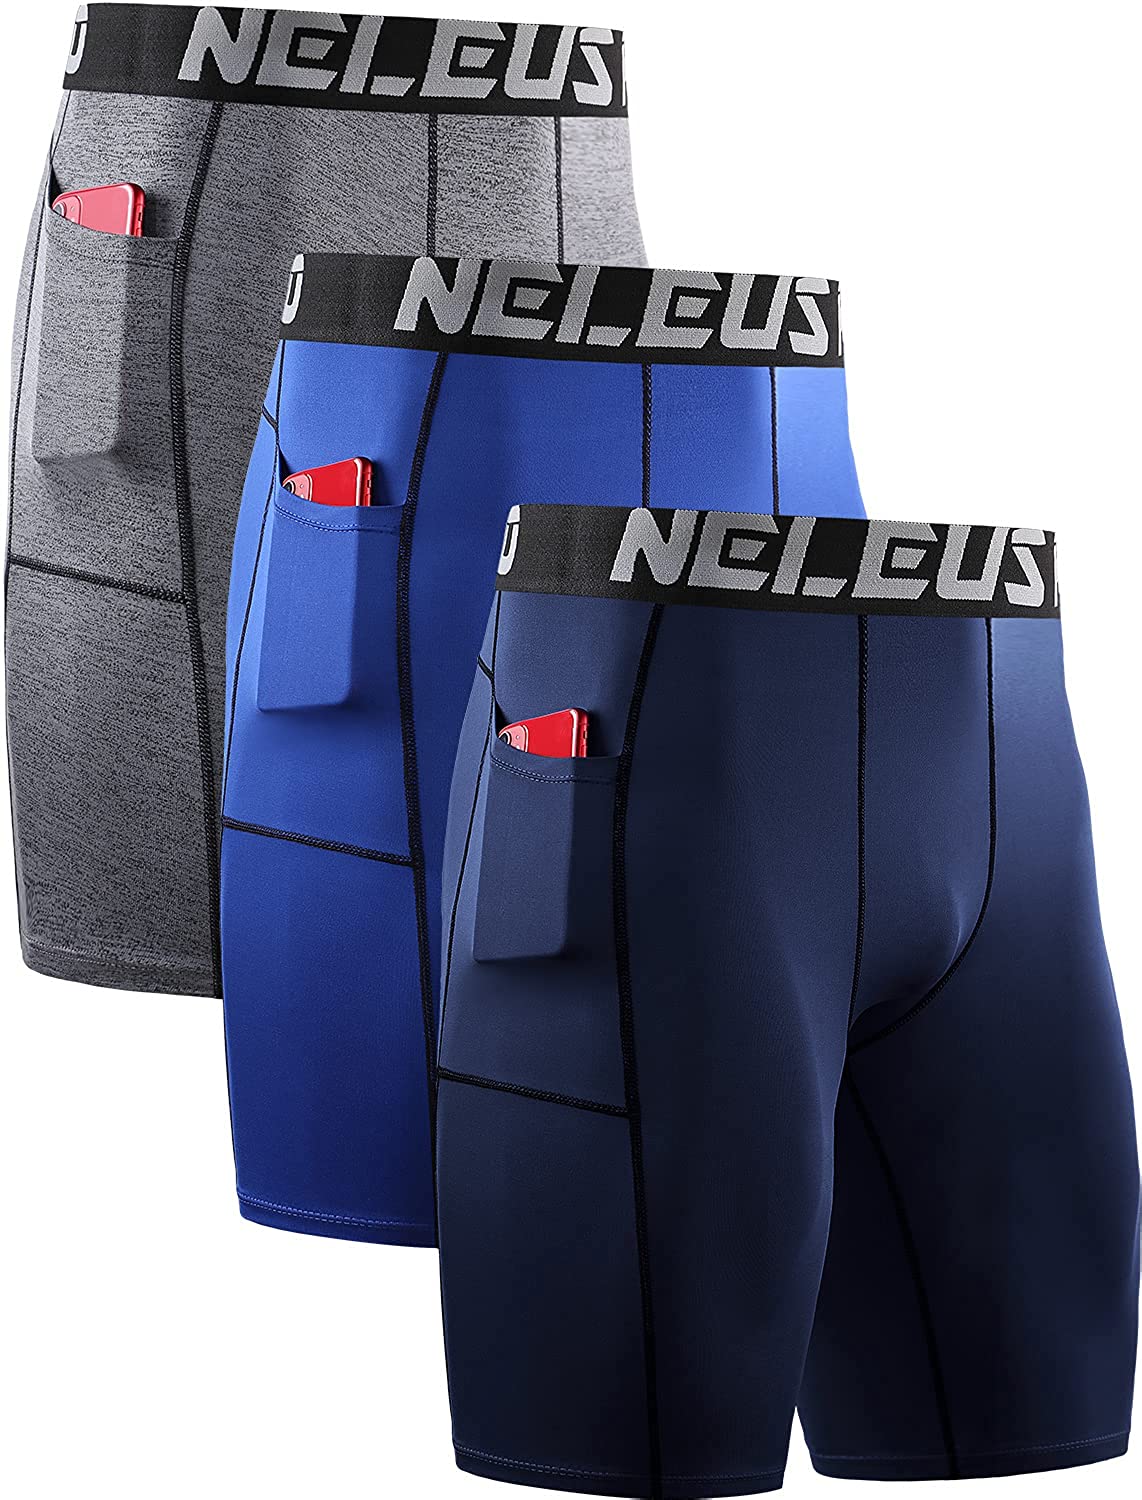 Neleus Men's 3 Pack Compression Short with Pocket